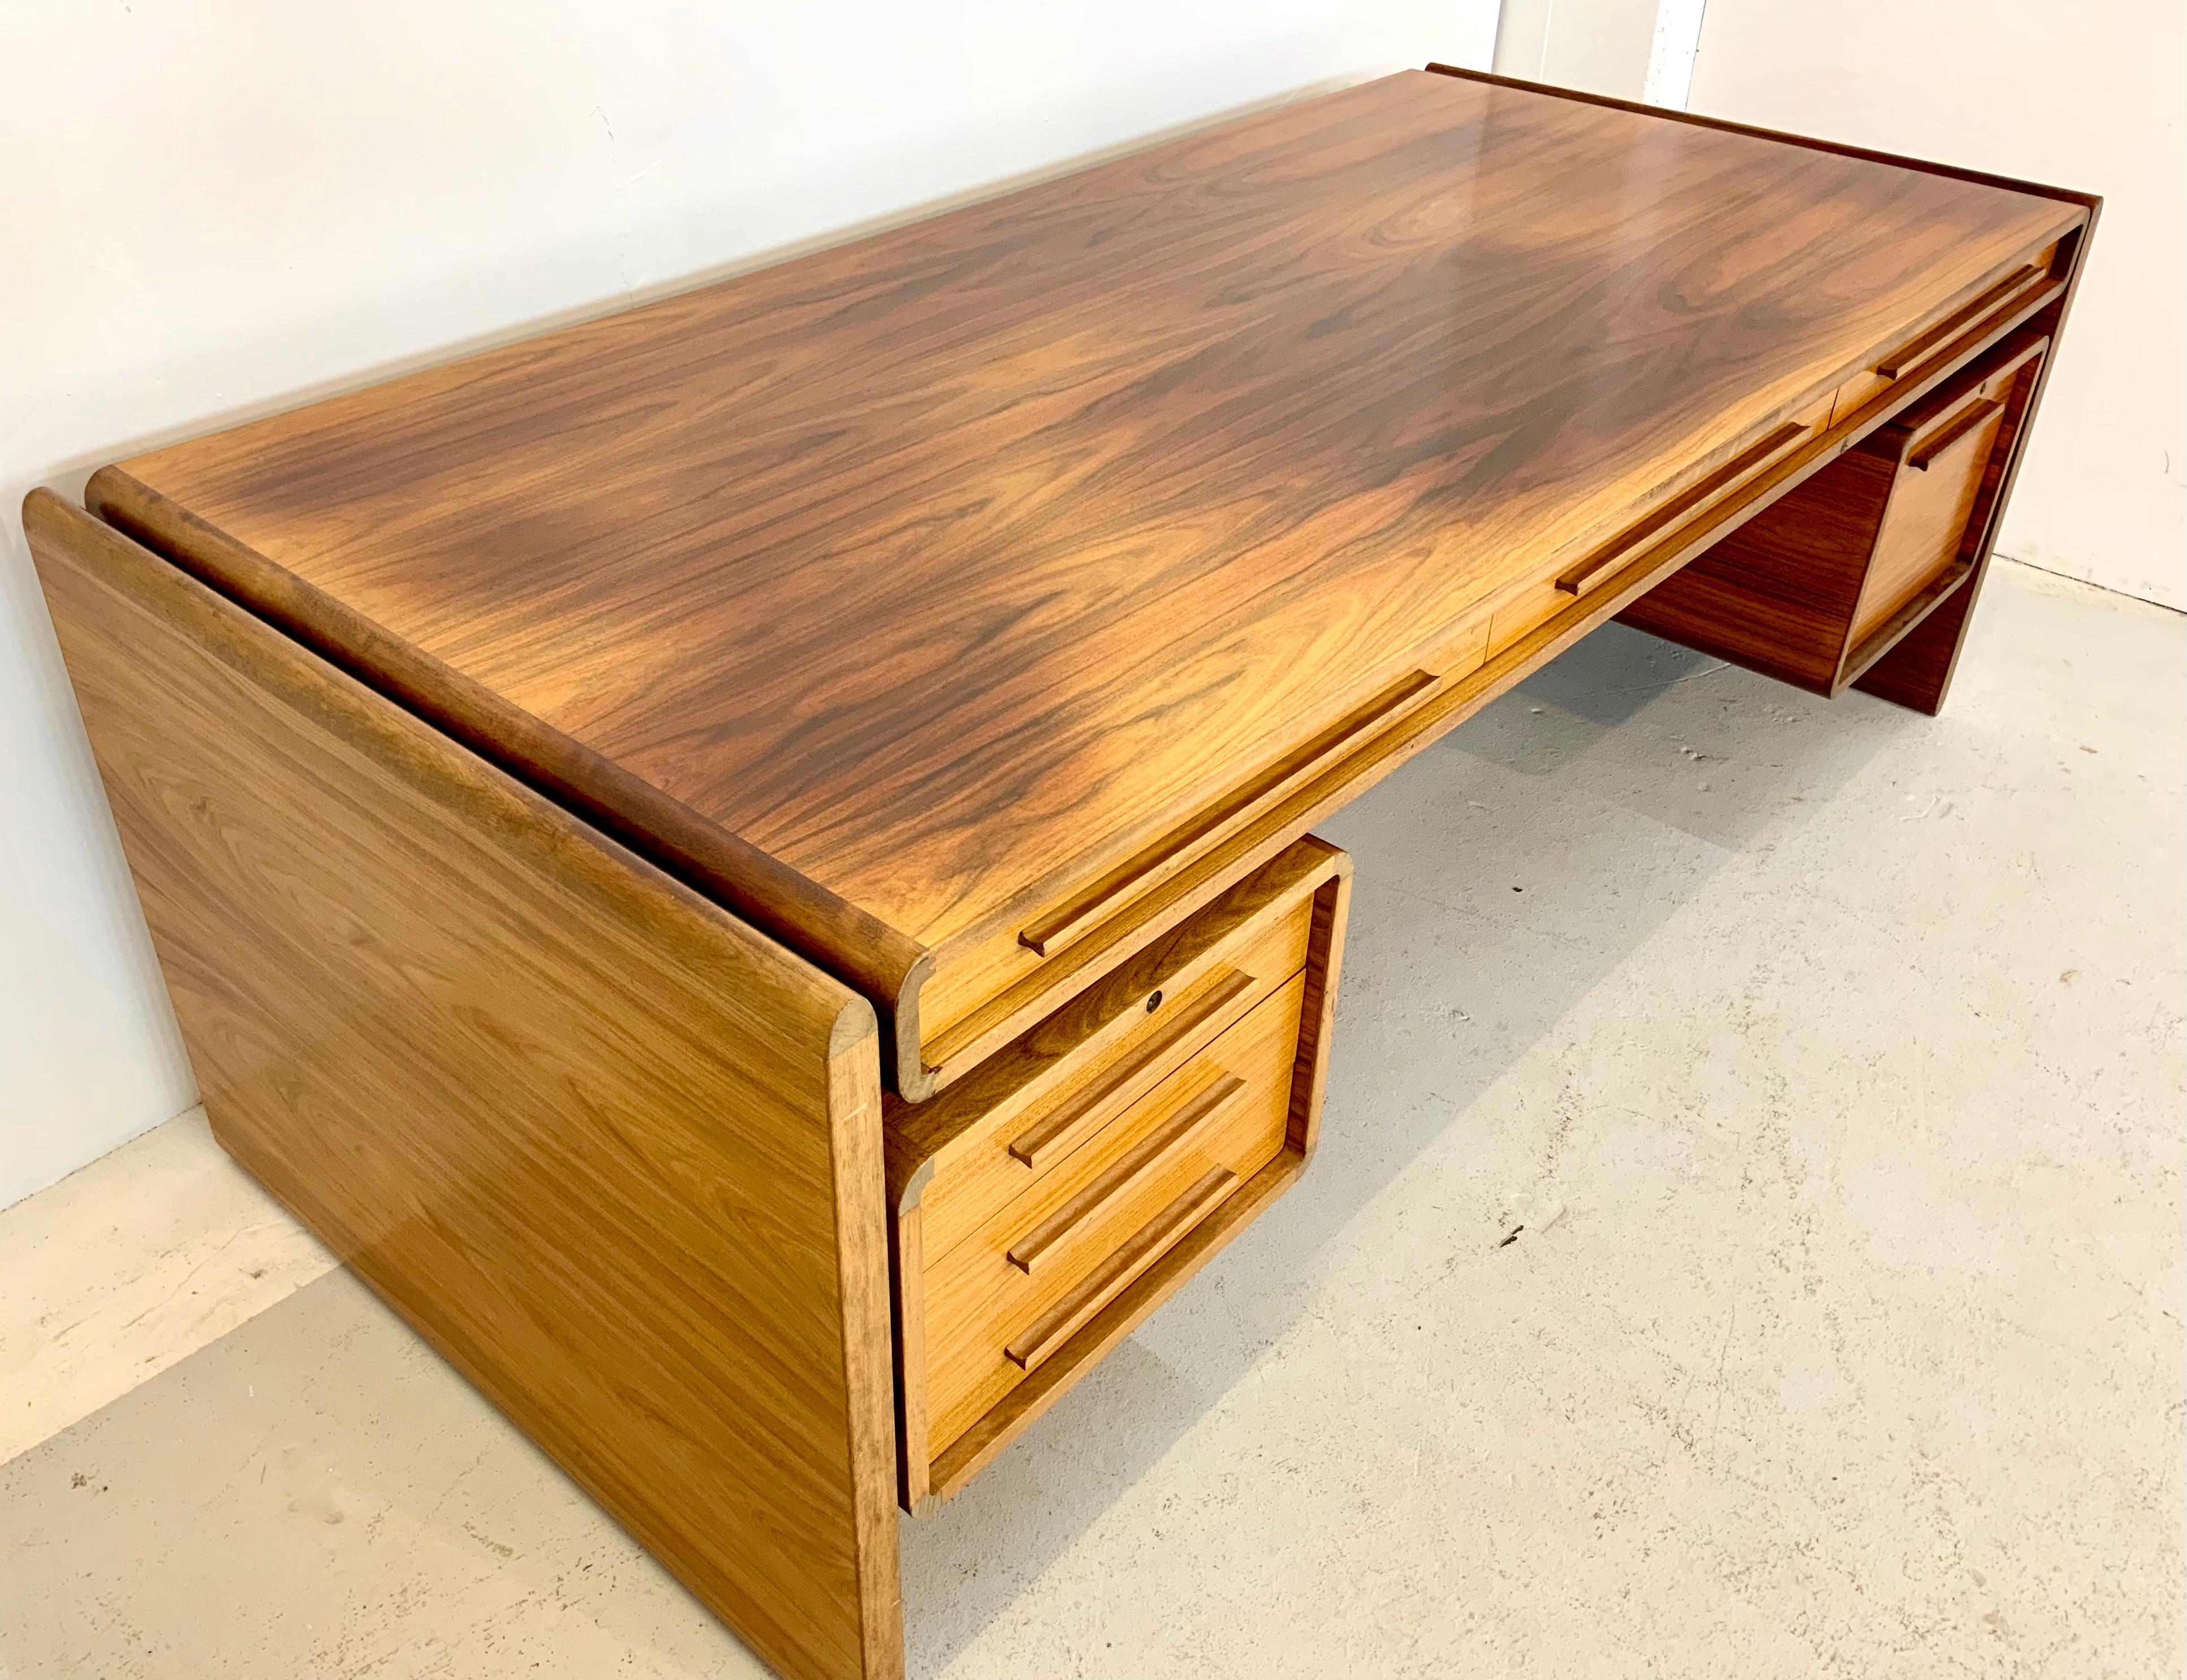 Wood By Svend Dyrlund Santos Rosewood Executive Midcentury Danish Modern Desk, 1960s For Sale